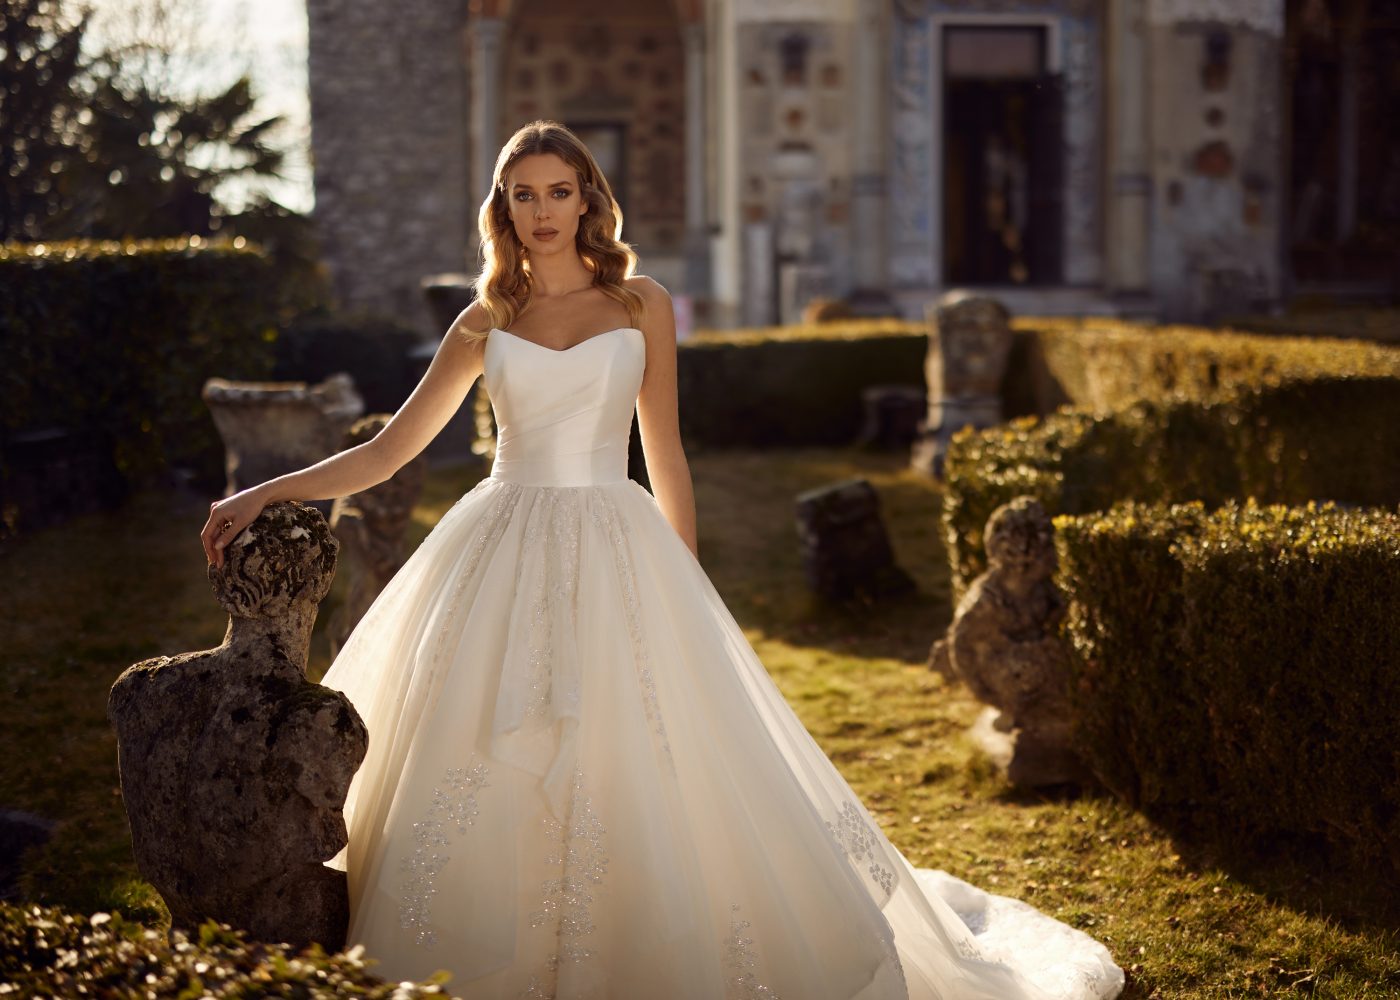 Elegant & Sophisticated Wedding Dresses - Kleinfeld